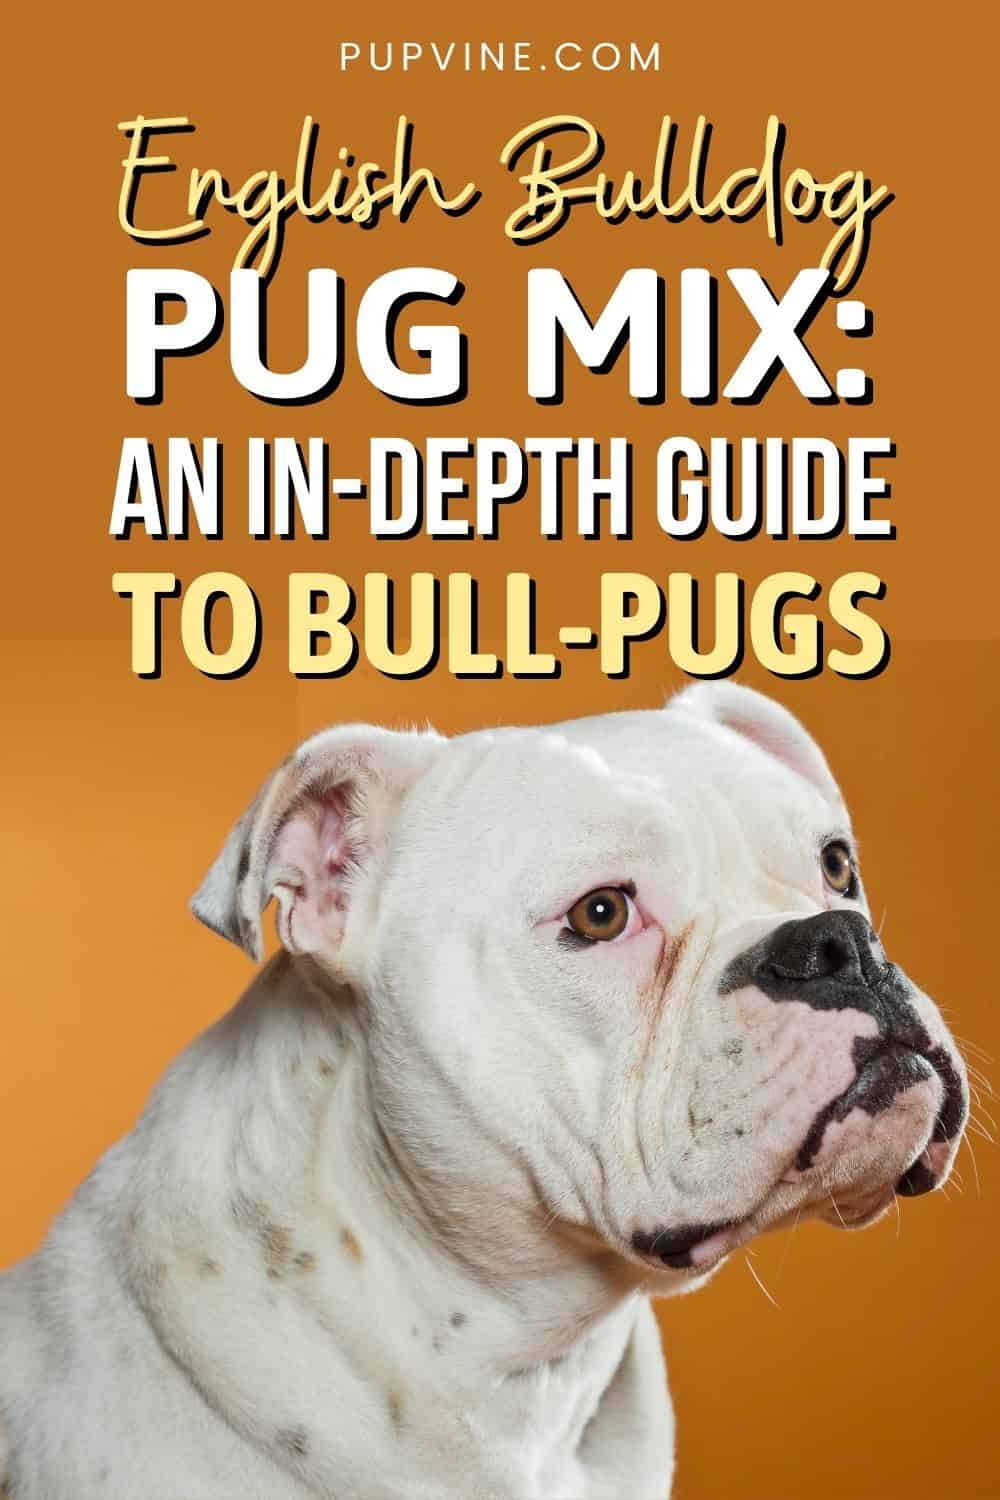 English Bulldog Pug Mix An In-Depth Guide To Bull-Pugs